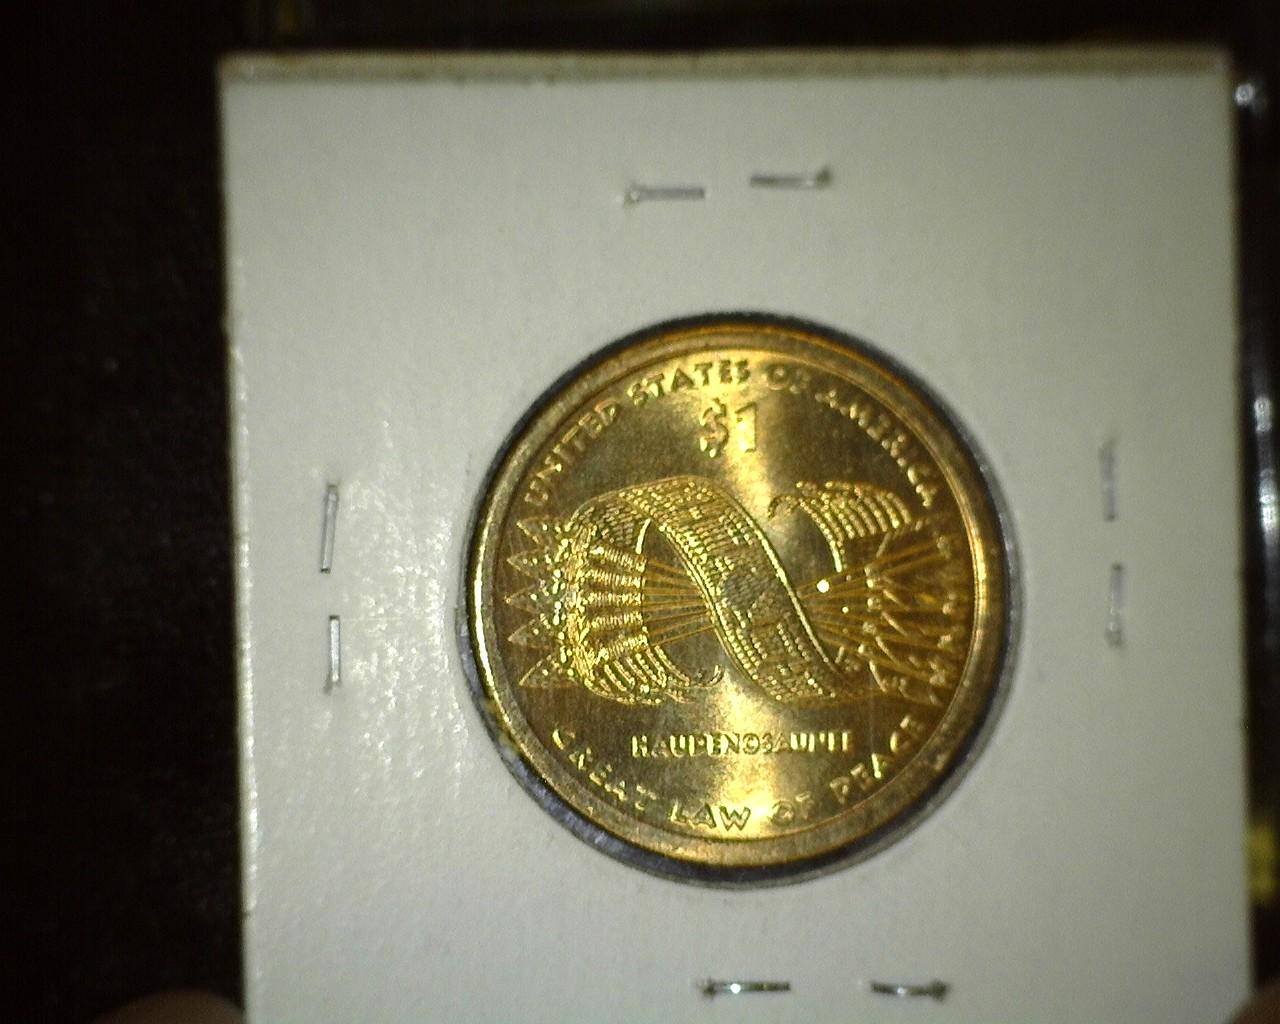 2010 P Native American "Golden" Dollar, Gem BU.